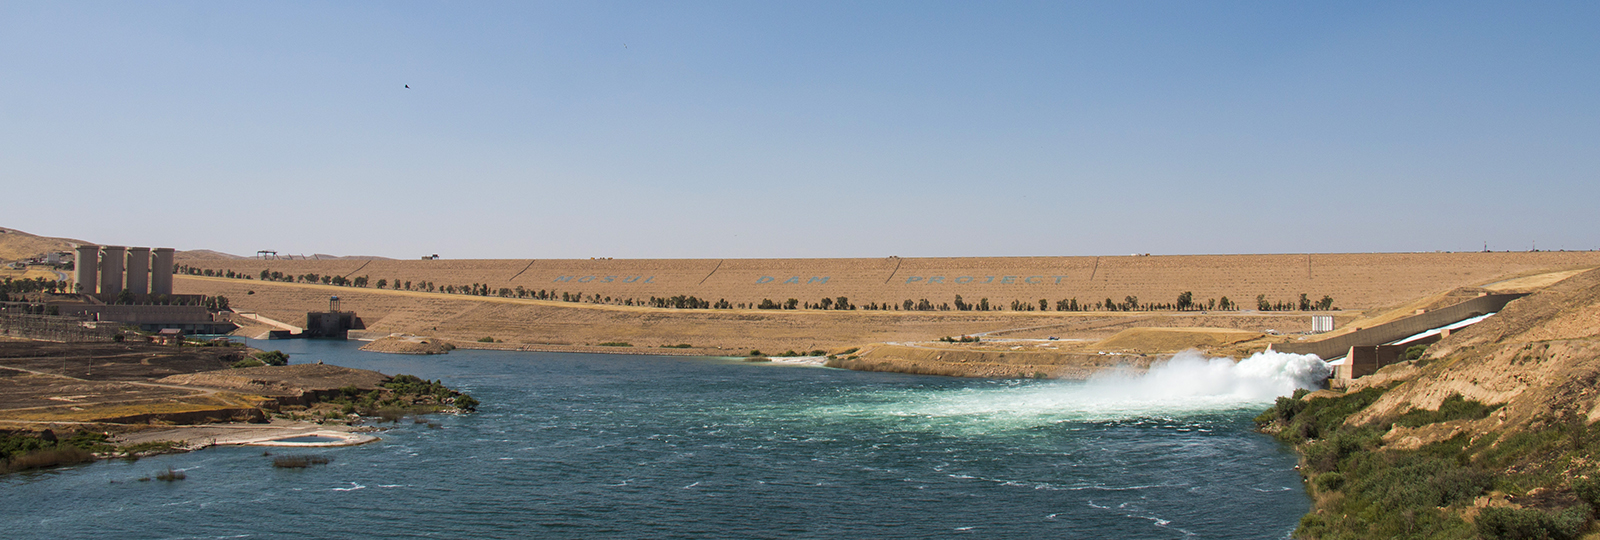 The Mosul Dam: the video